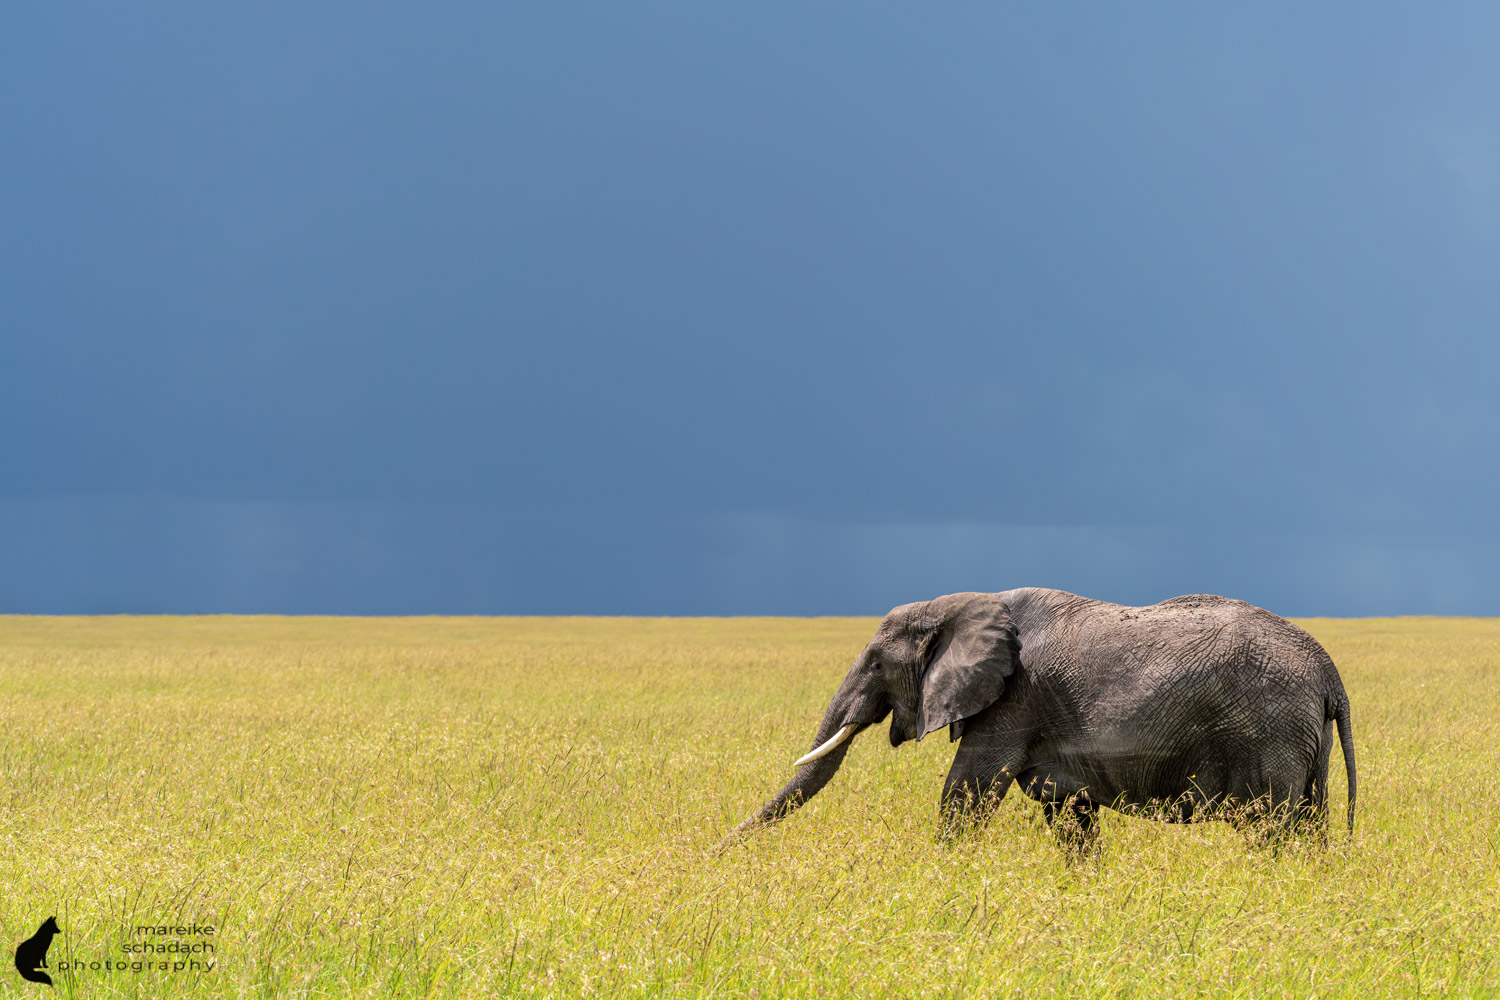 Elephant in Masai Mara